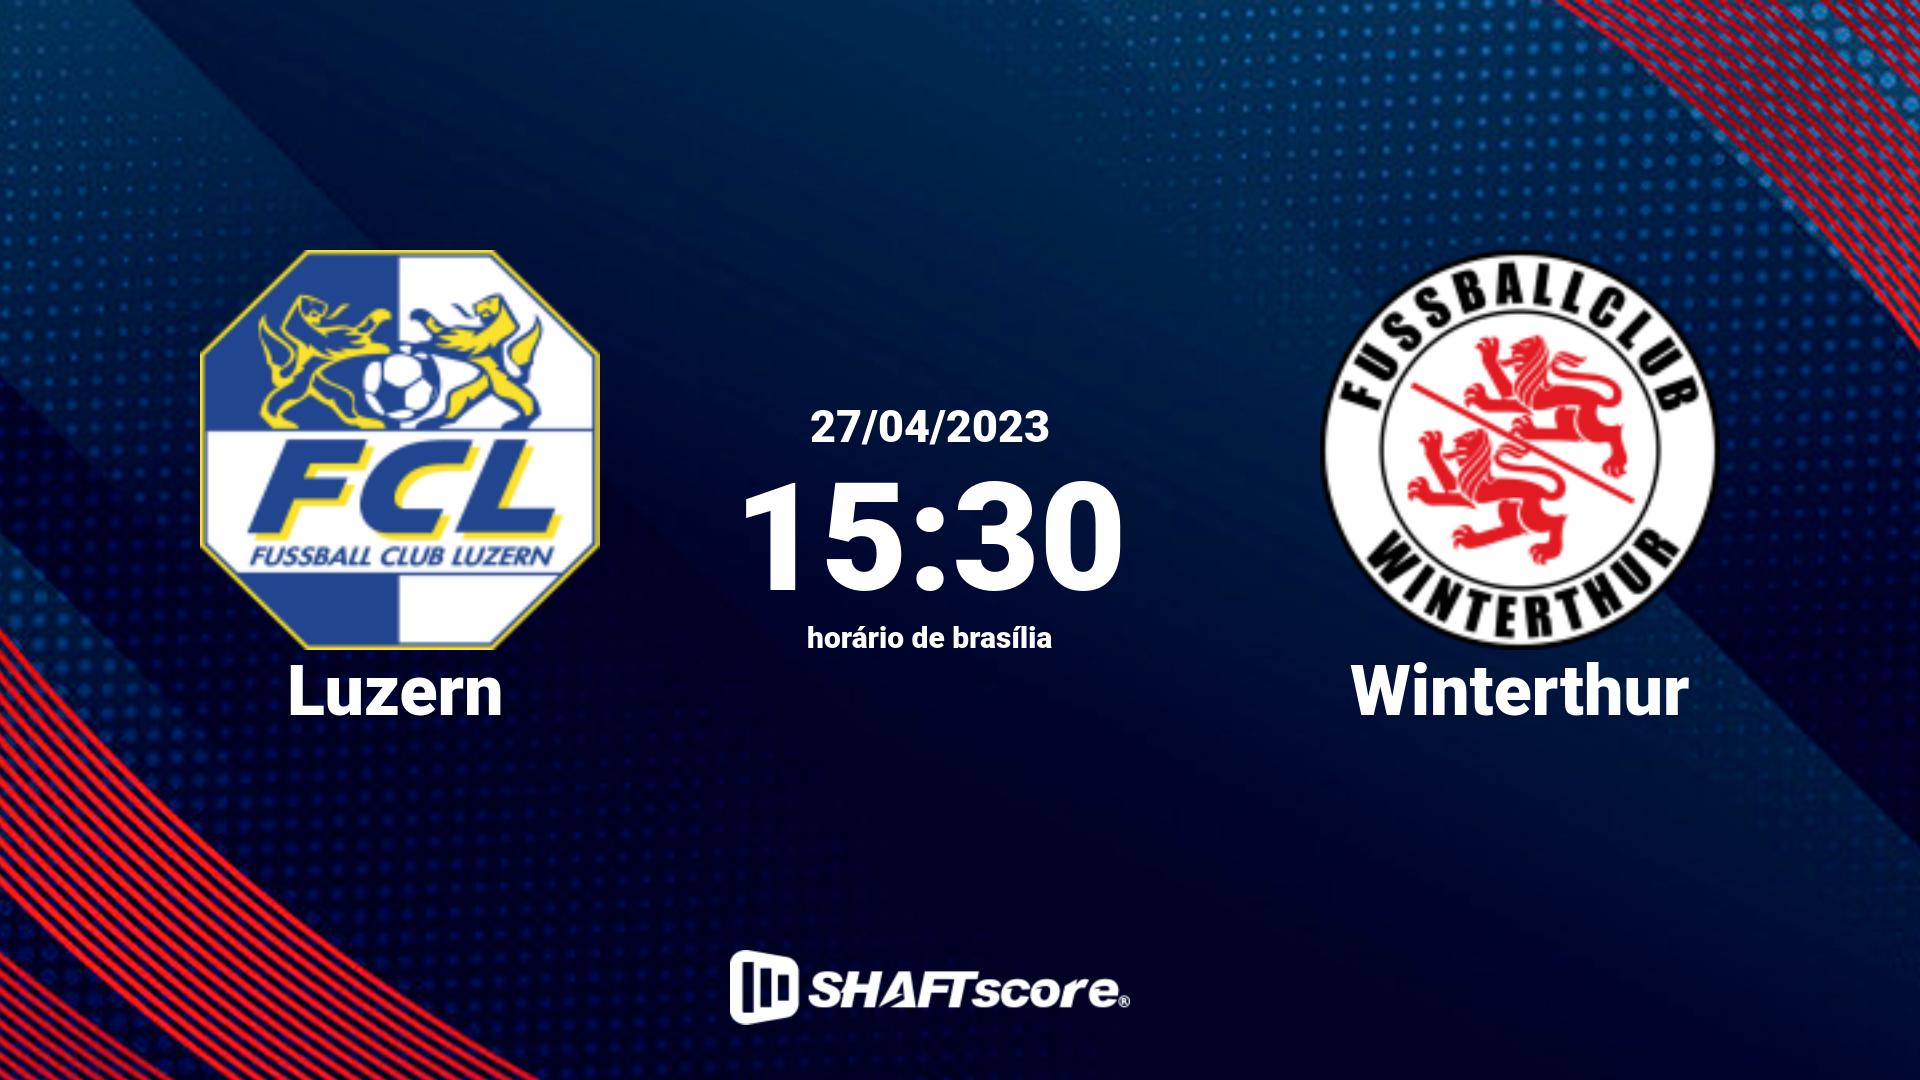 Estatísticas do jogo Luzern vs Winterthur 27.04 15:30